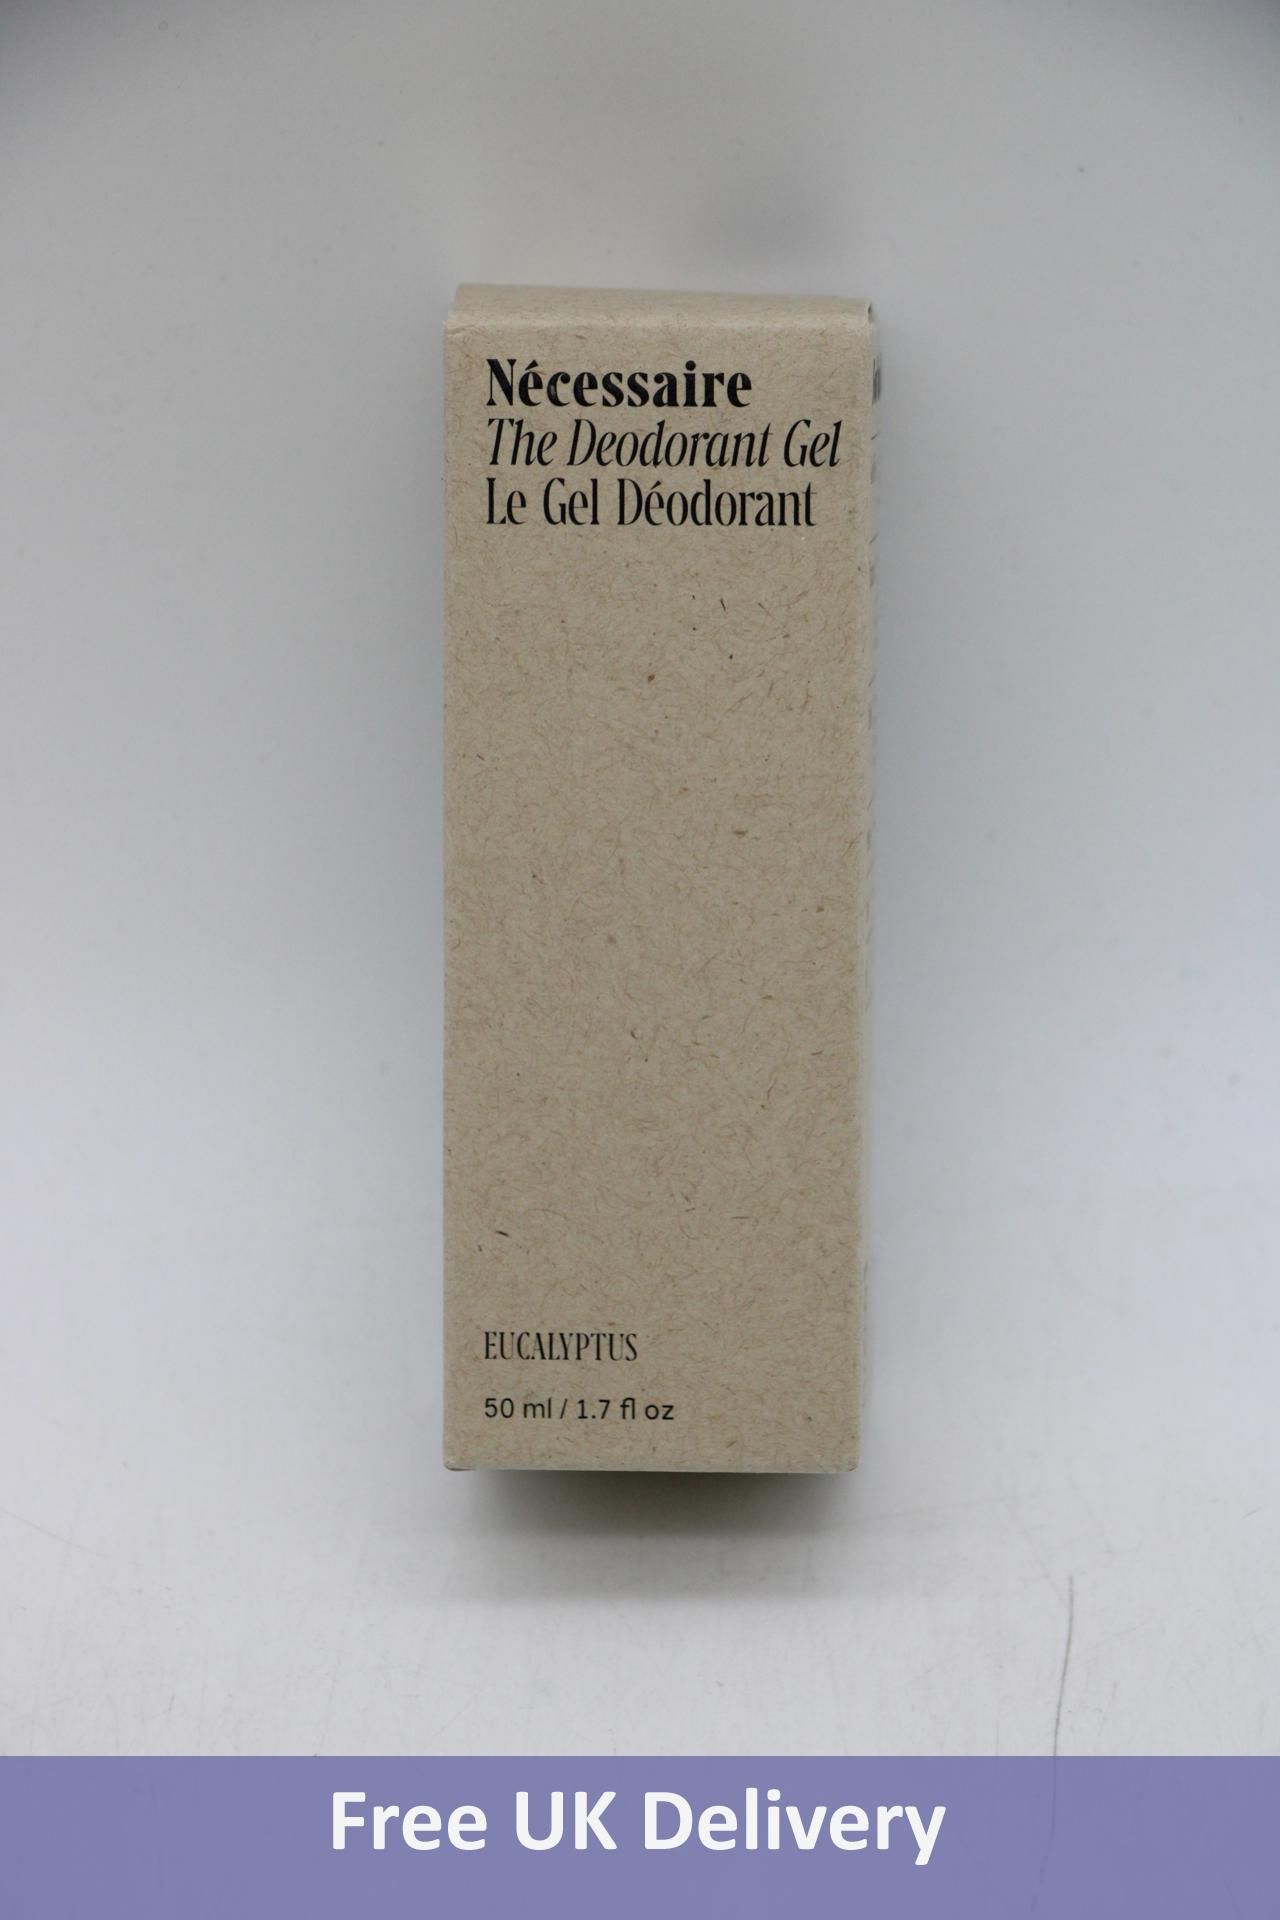 Fifteen bottles of Necessaire The Deodorant Gel Eucalyptus, Lime Green, Size 50ml